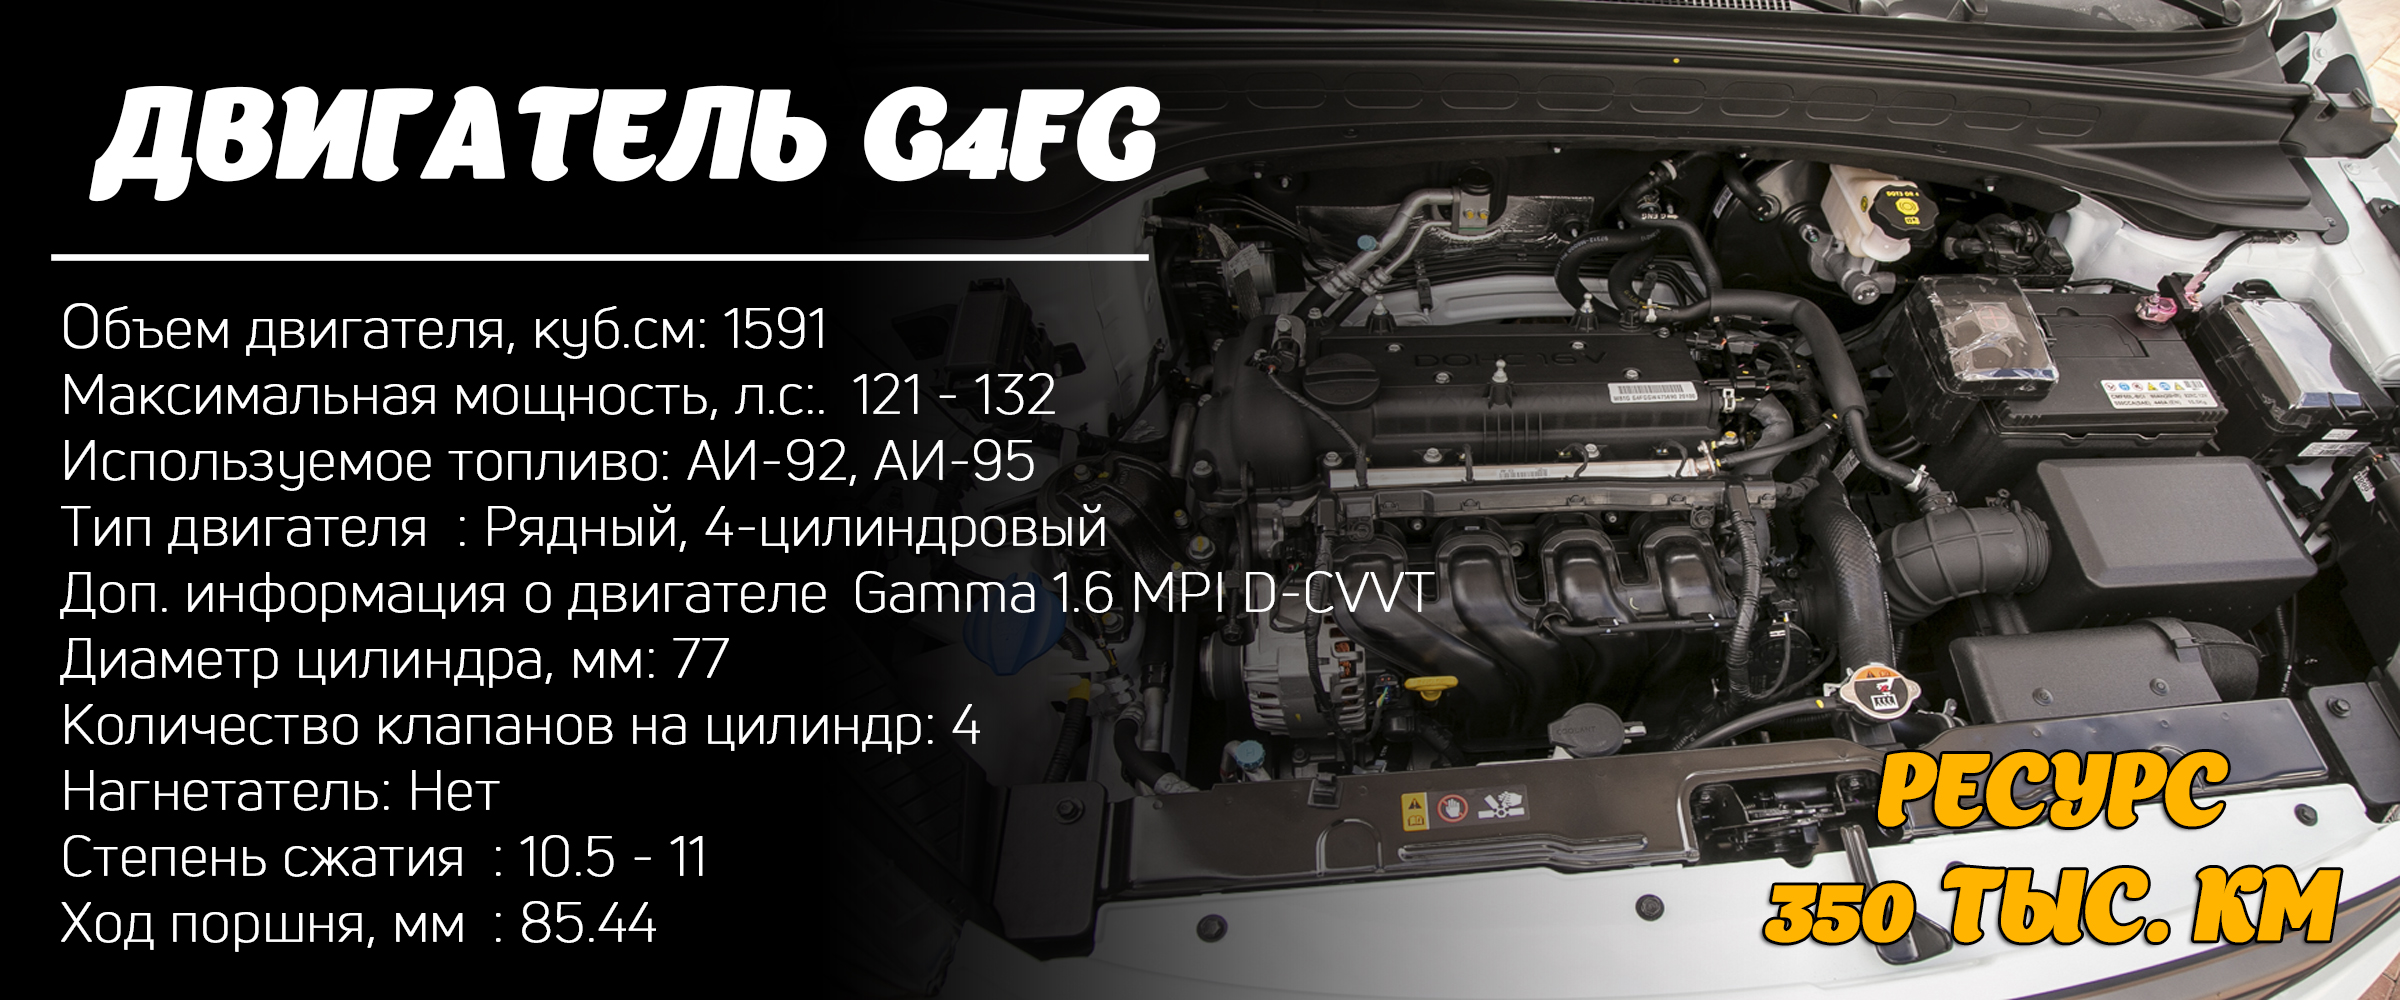 Двигатель G4FG: ресурс, характеристики